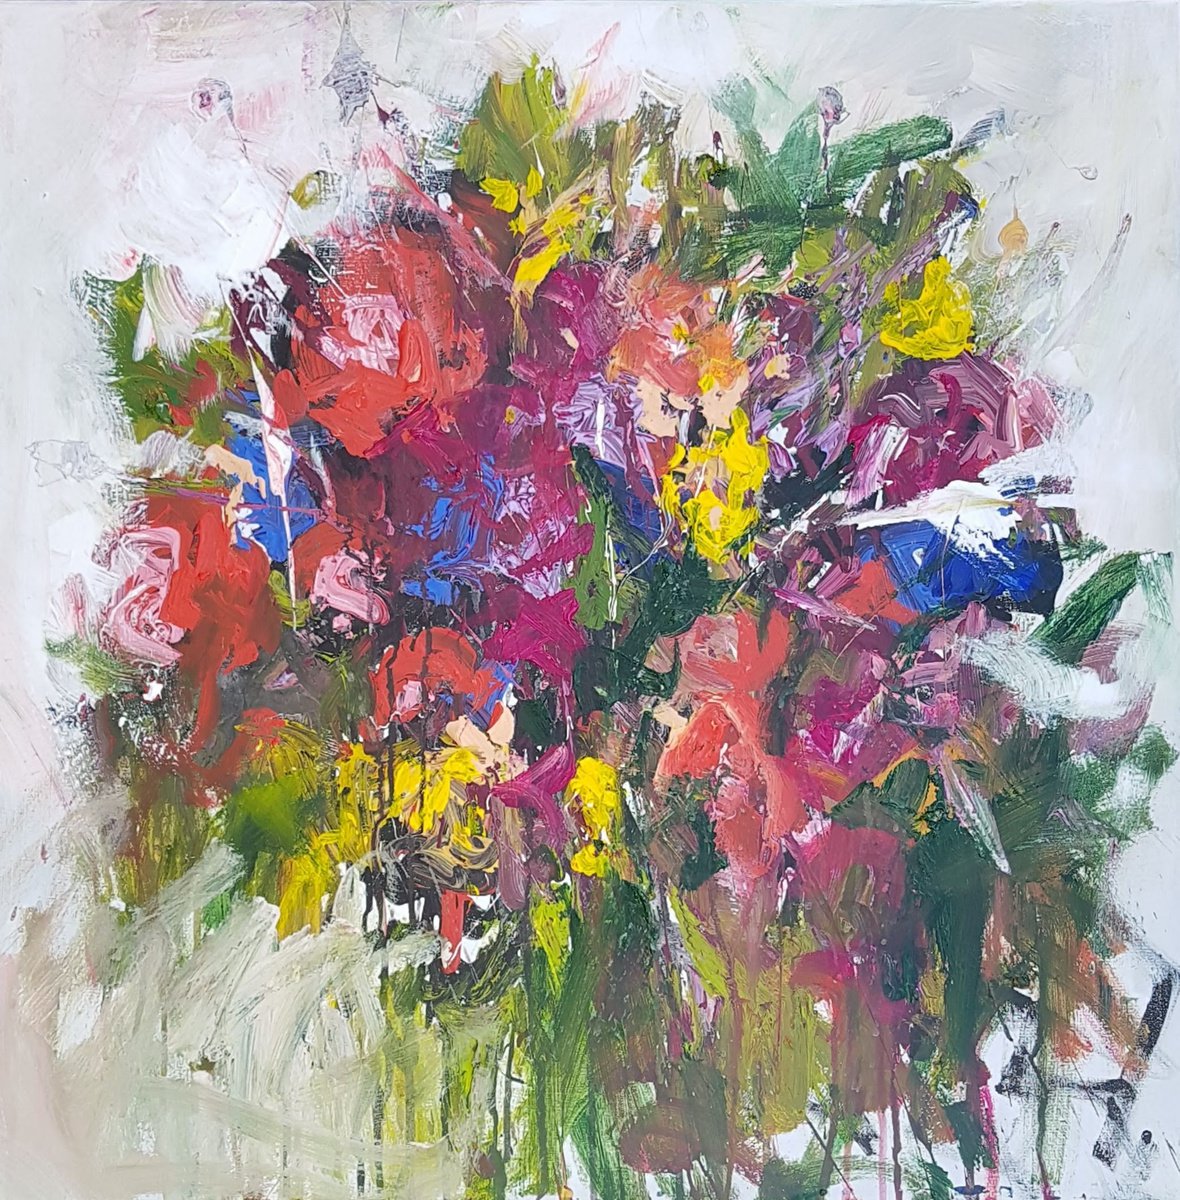 Abstract bouquet flowers by Wim van de Wege